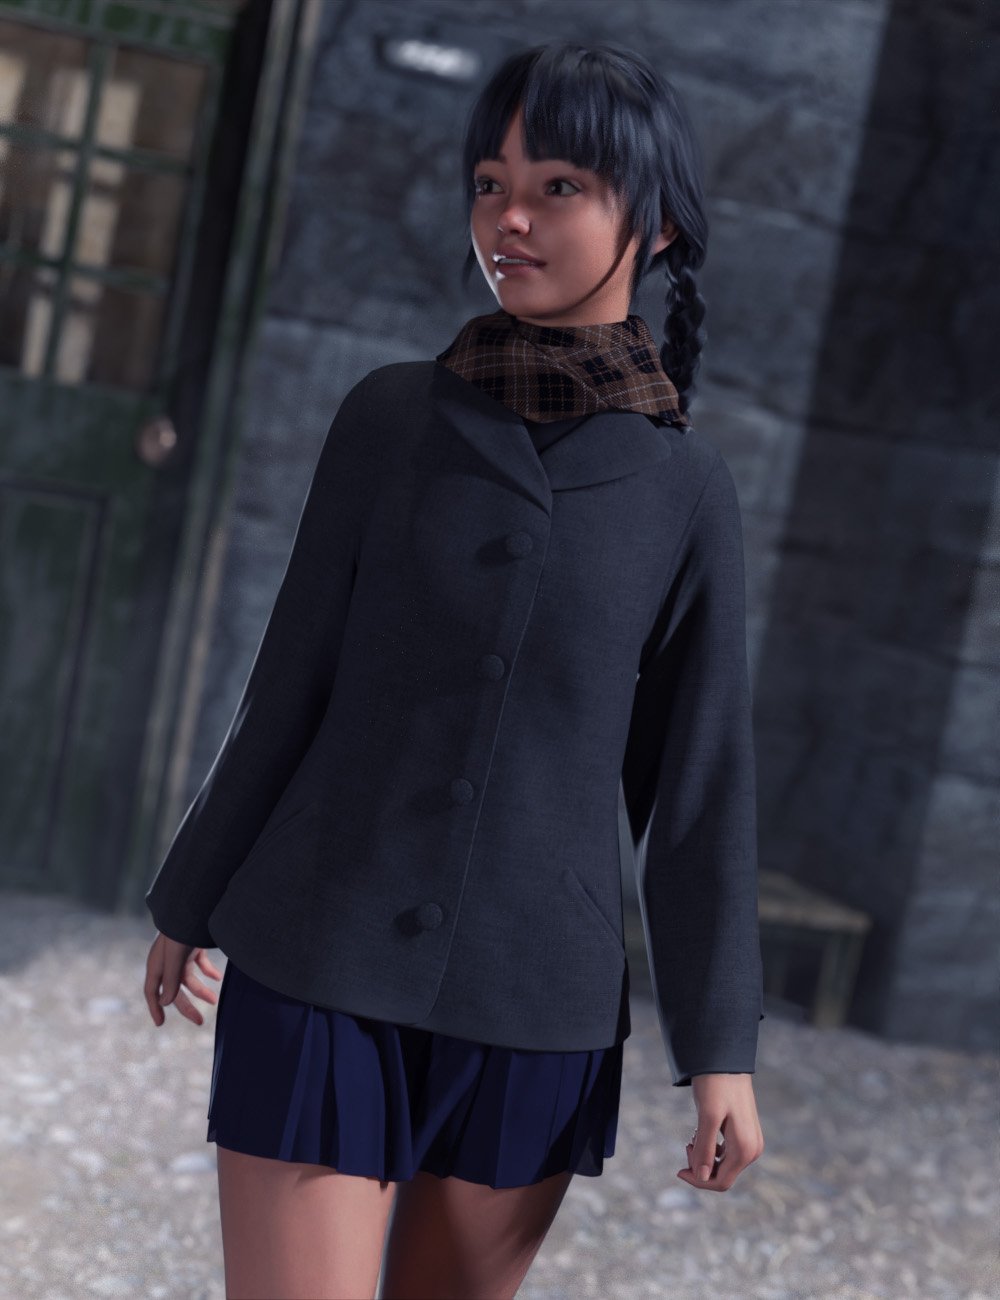 dForce Winter Coat Outfit for Genesis 9 by: tentman, 3D Models by Daz 3D